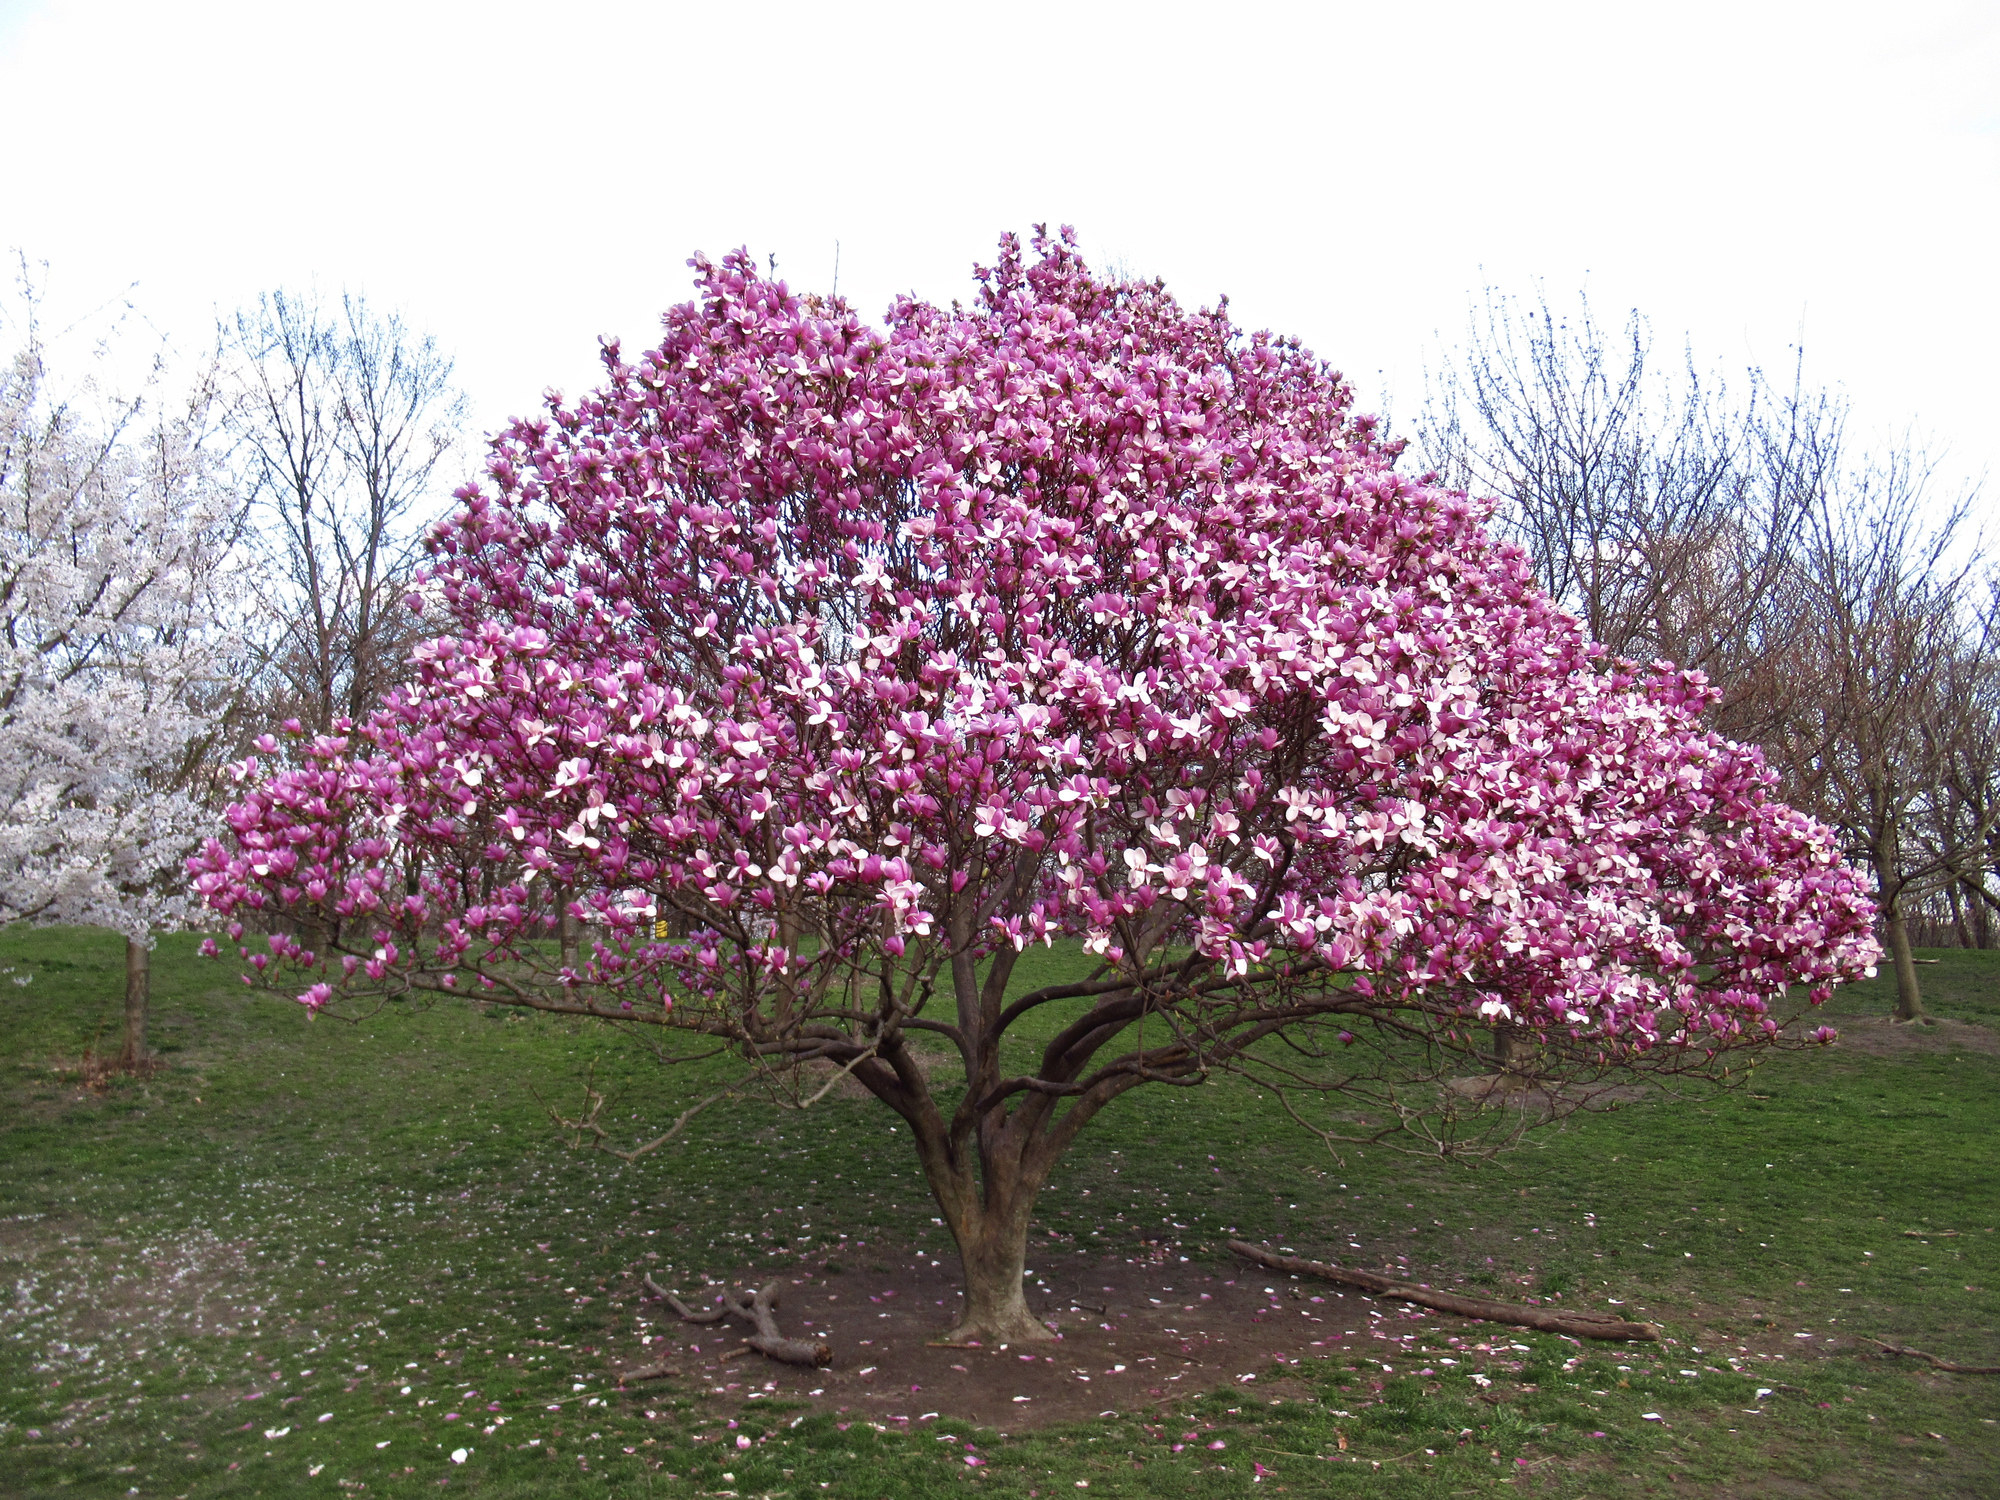 A magnolia tree in full bloom